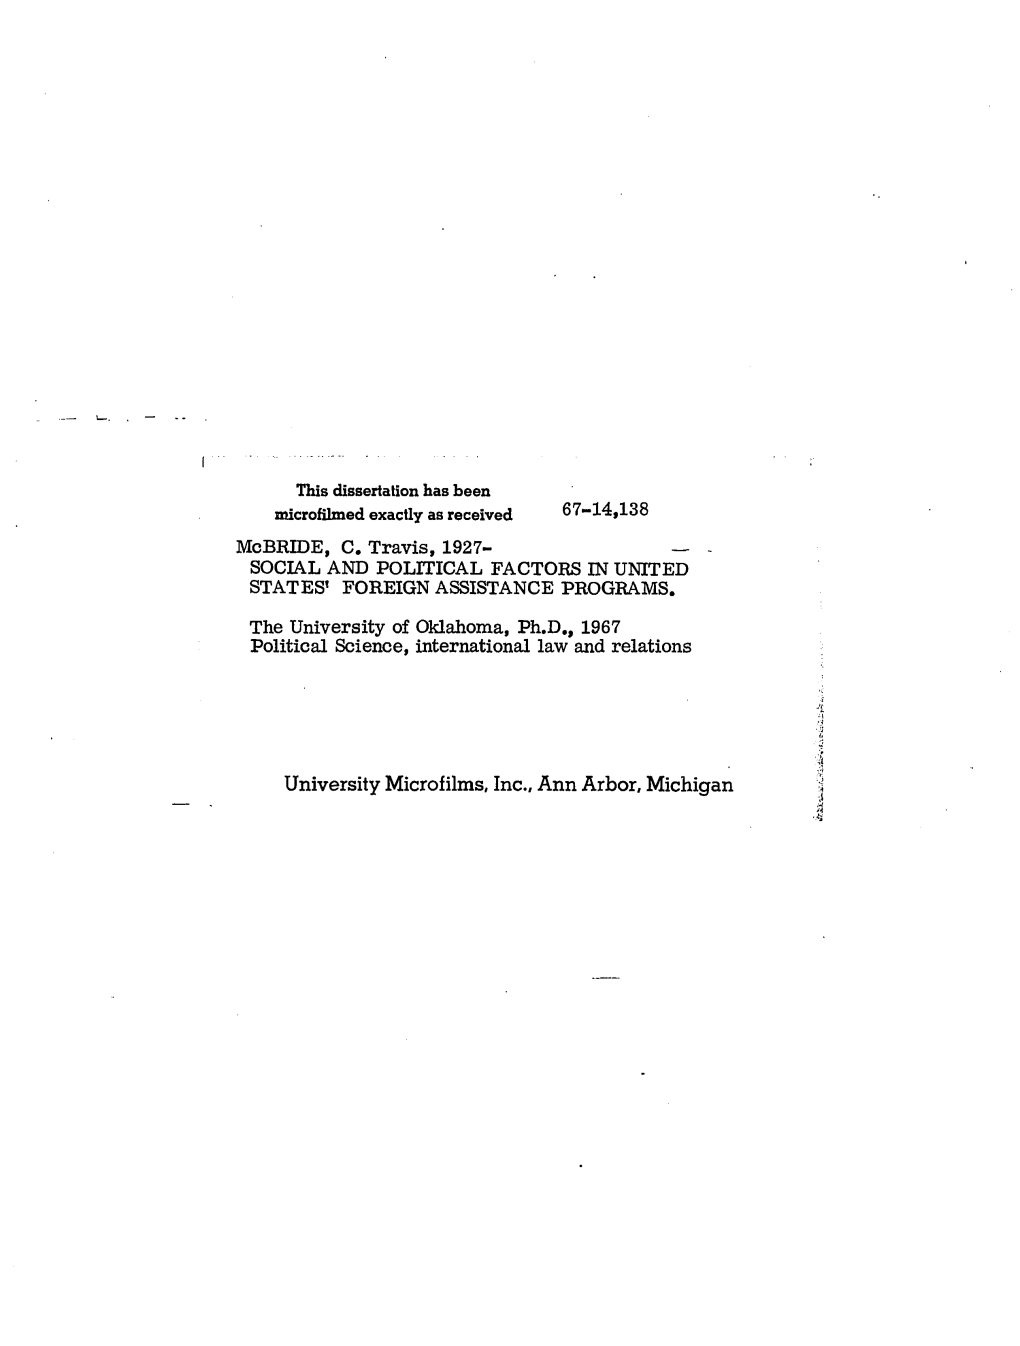 University Microfilms, Inc., Ann Arbor, Michigan the UNIVEBSITY of OKLAHOMA